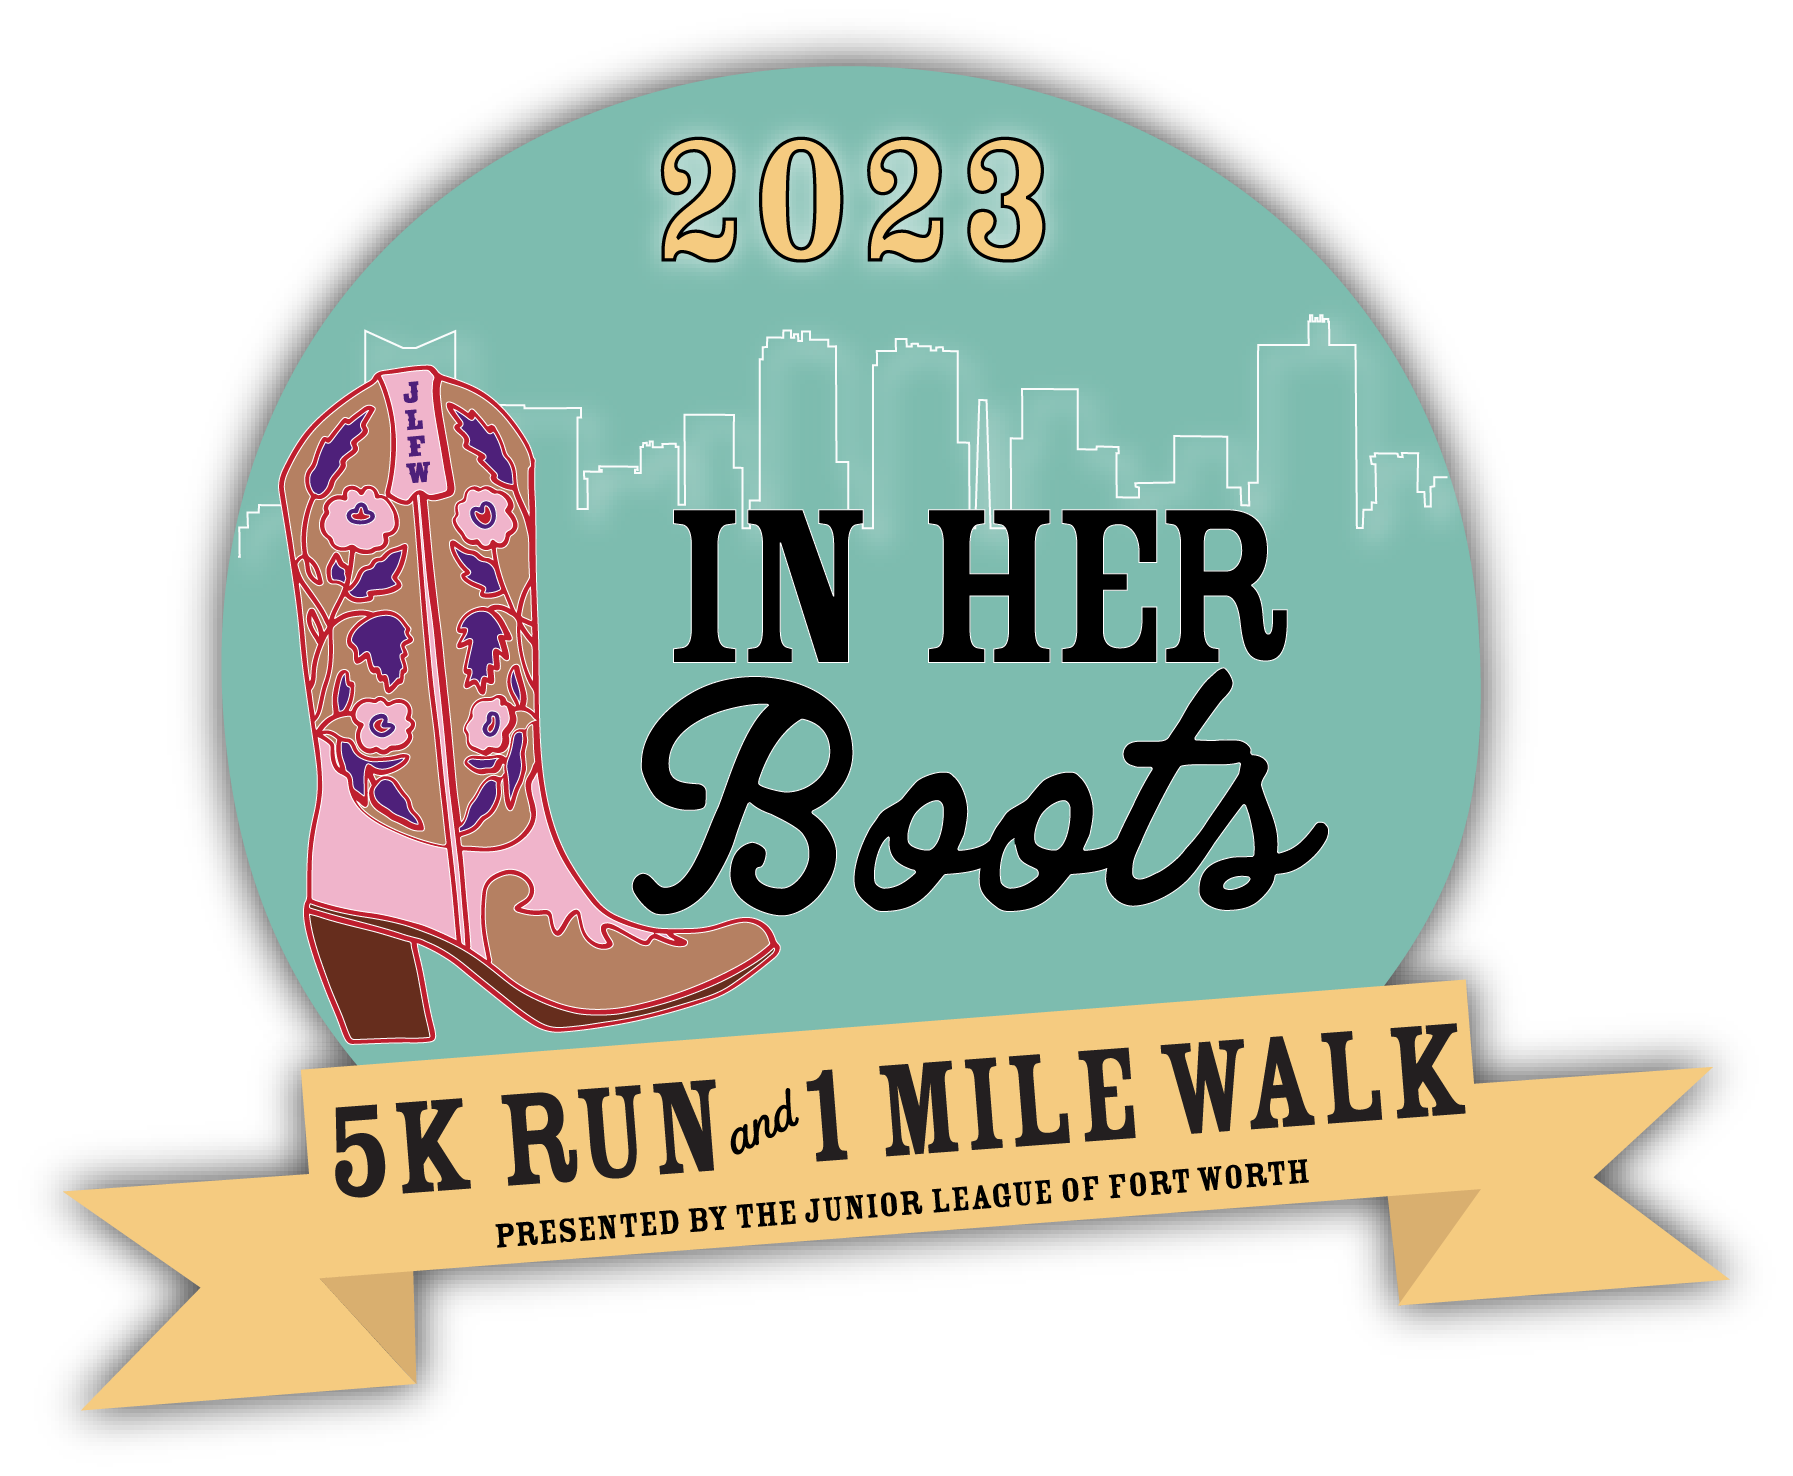 In Her Boots 5K Run & 1 Mile Walk